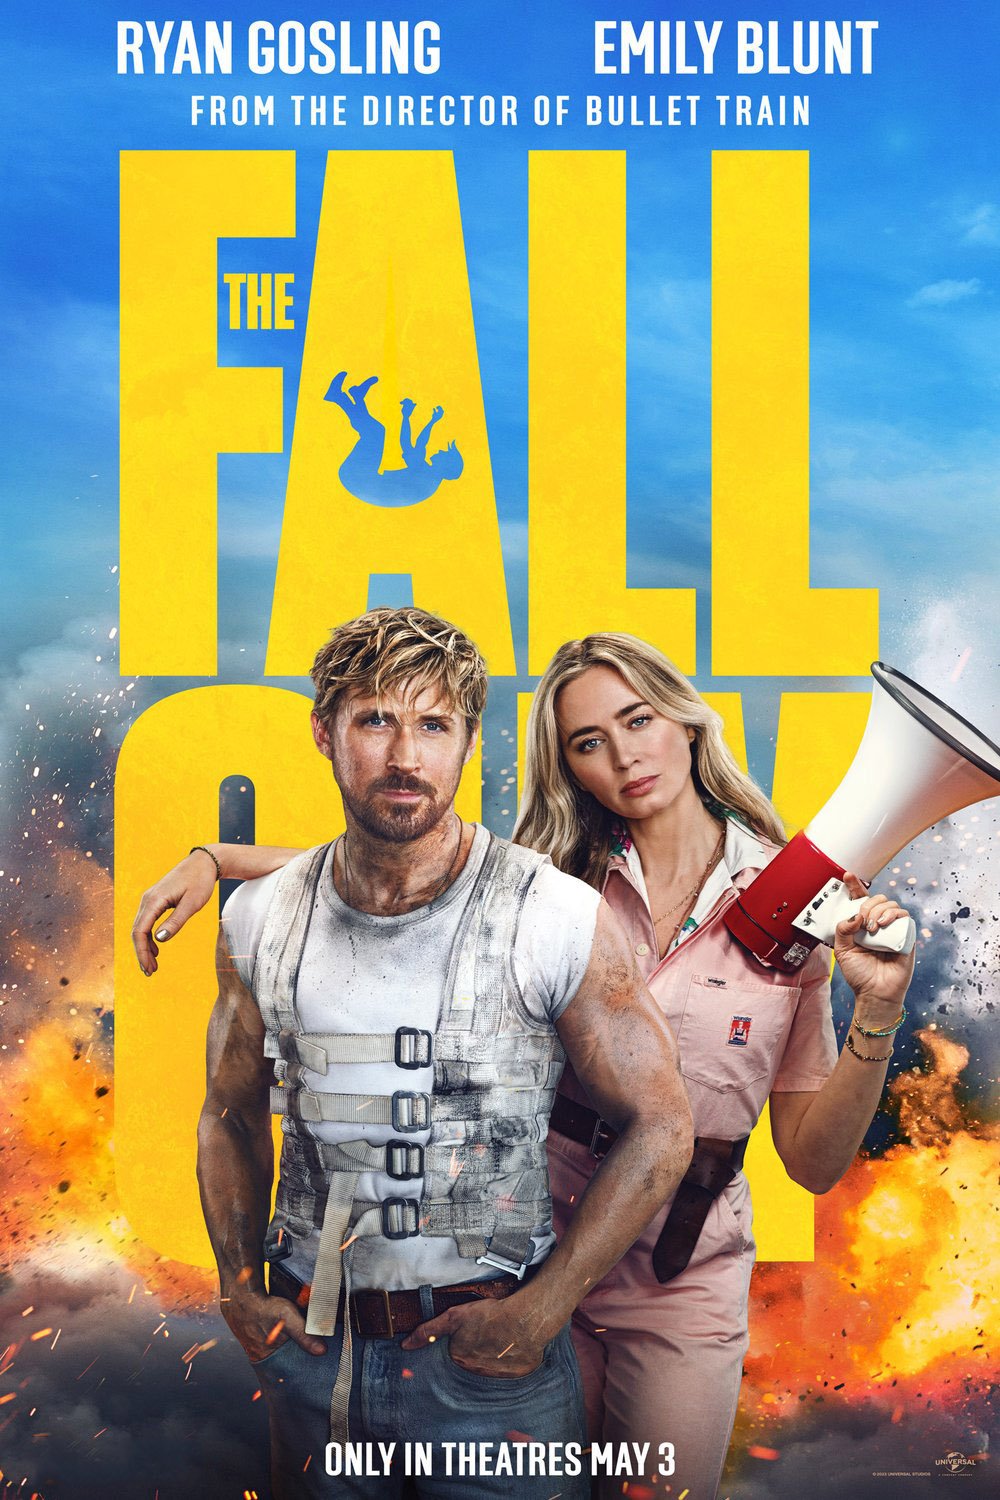 L'affiche du film The Fall Guy